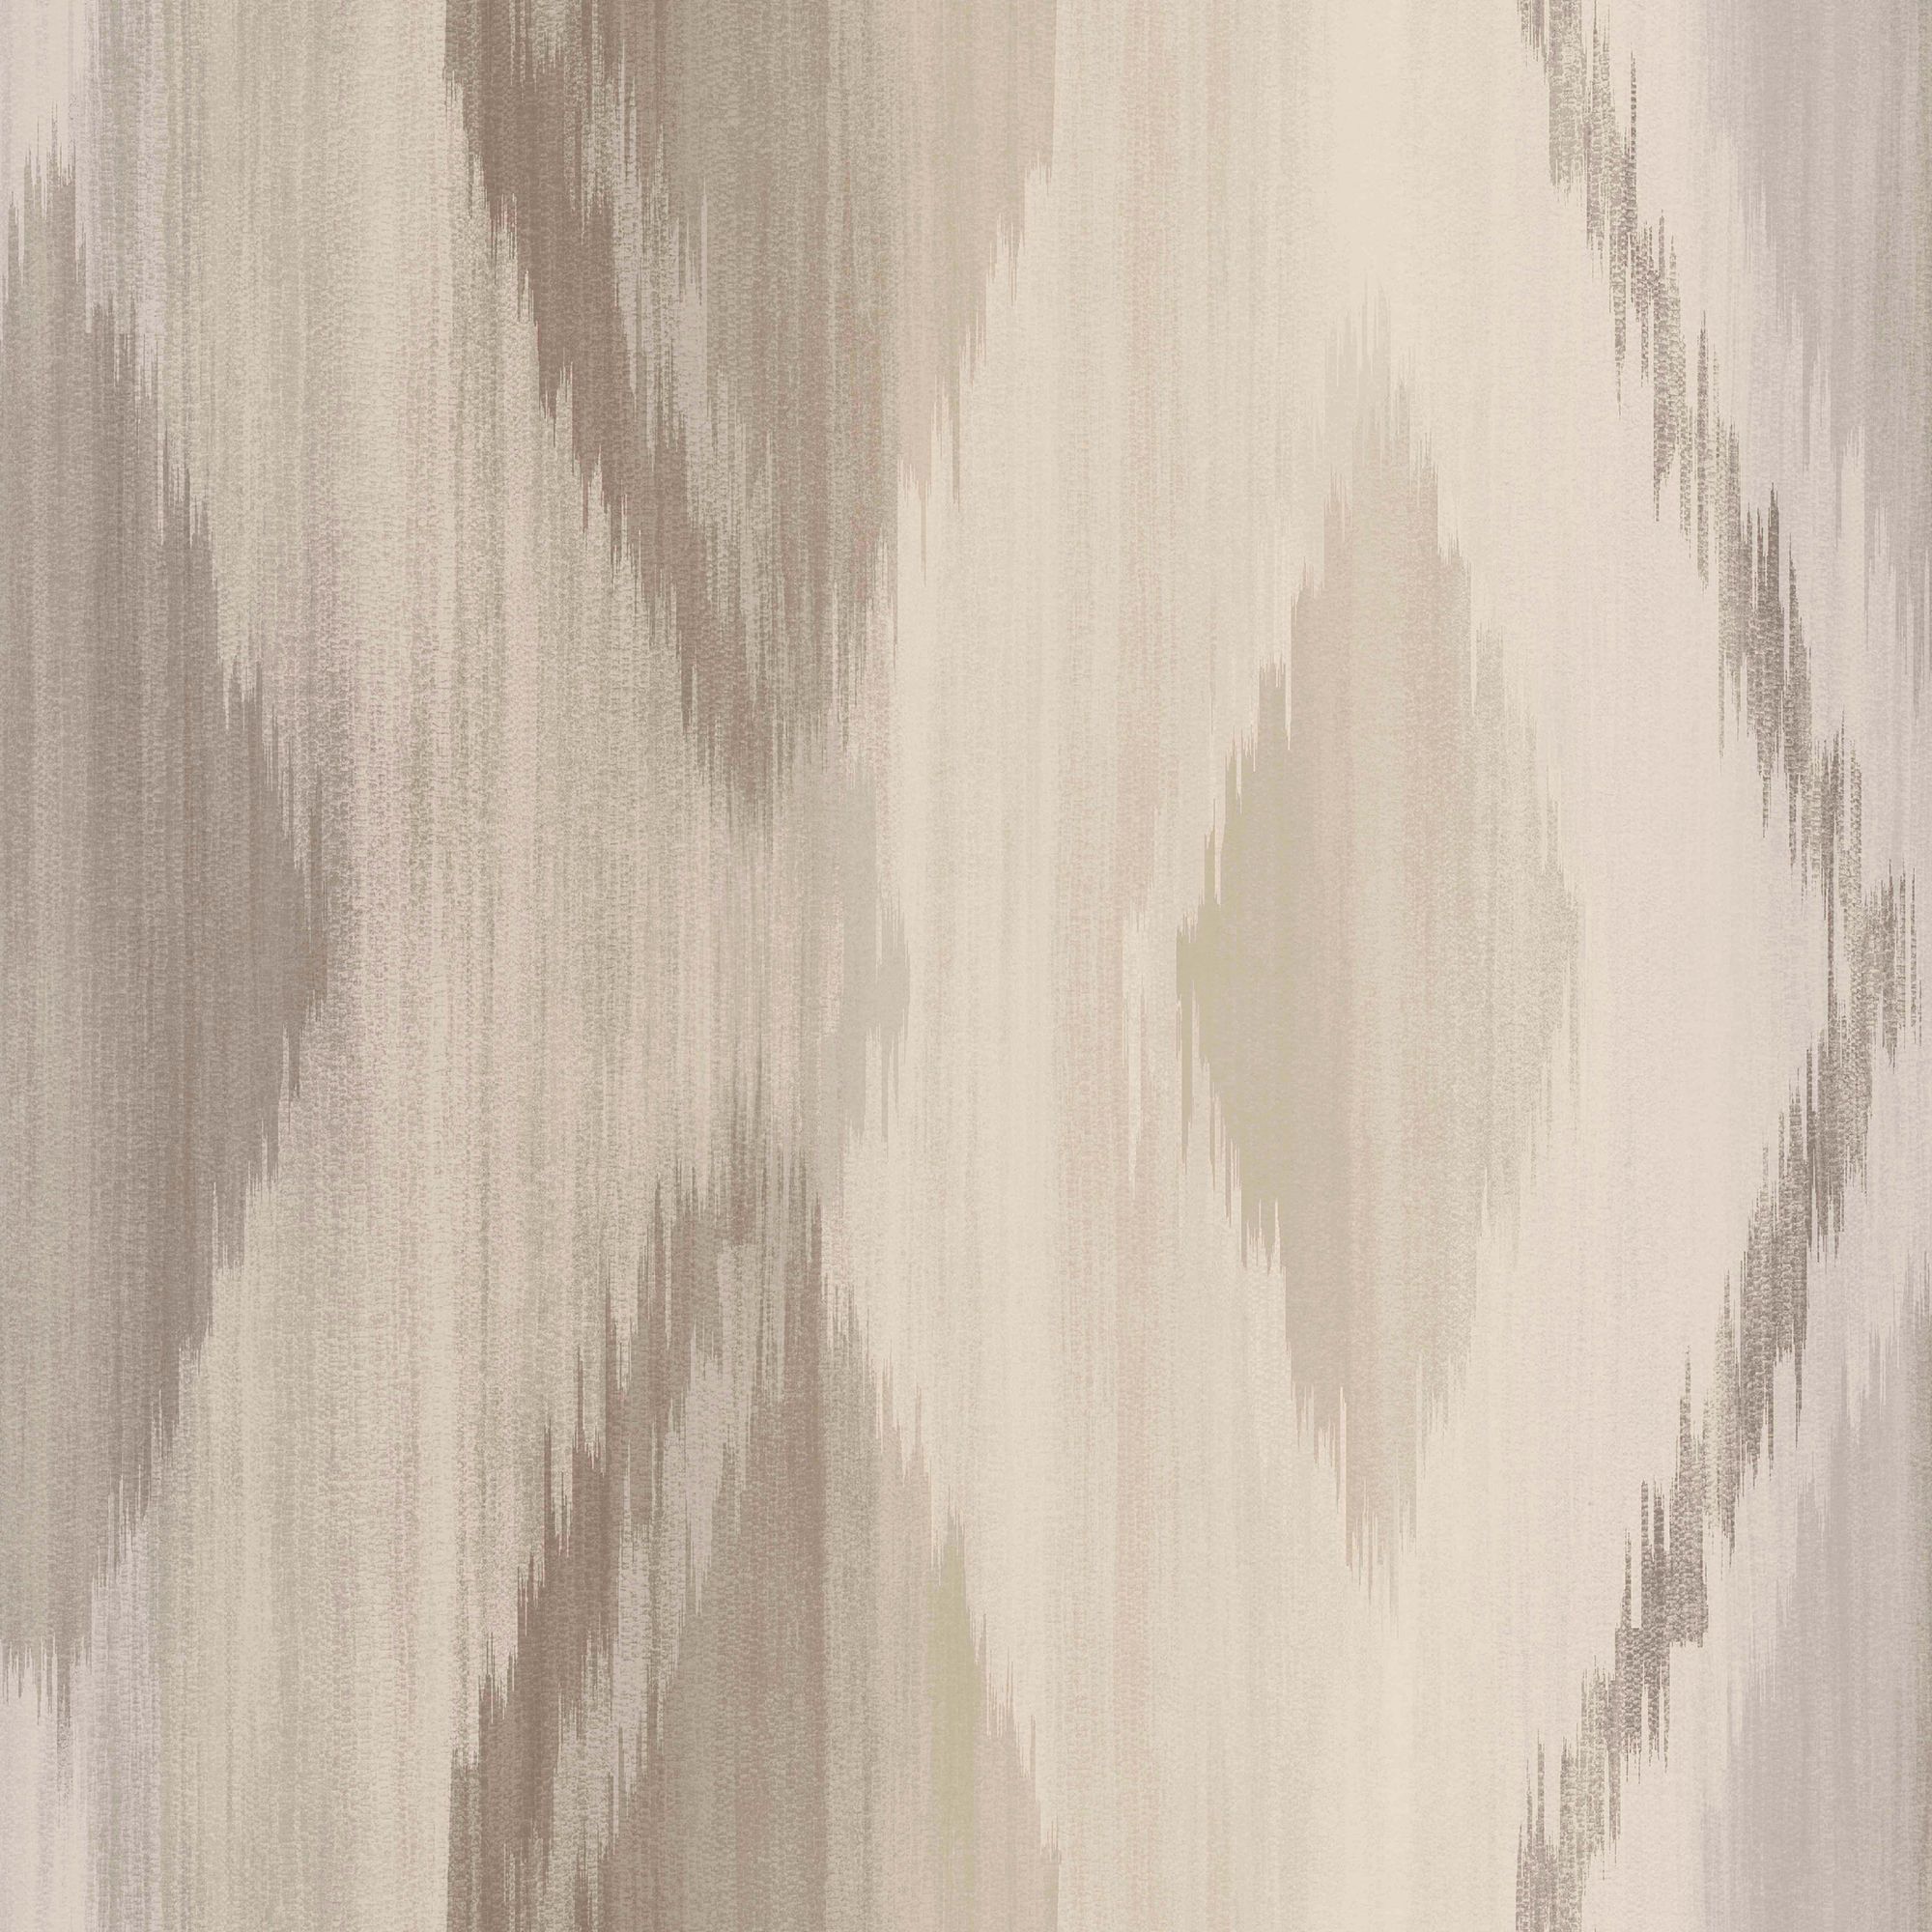 Next Abstract ikat Neutral Smooth Wallpaper